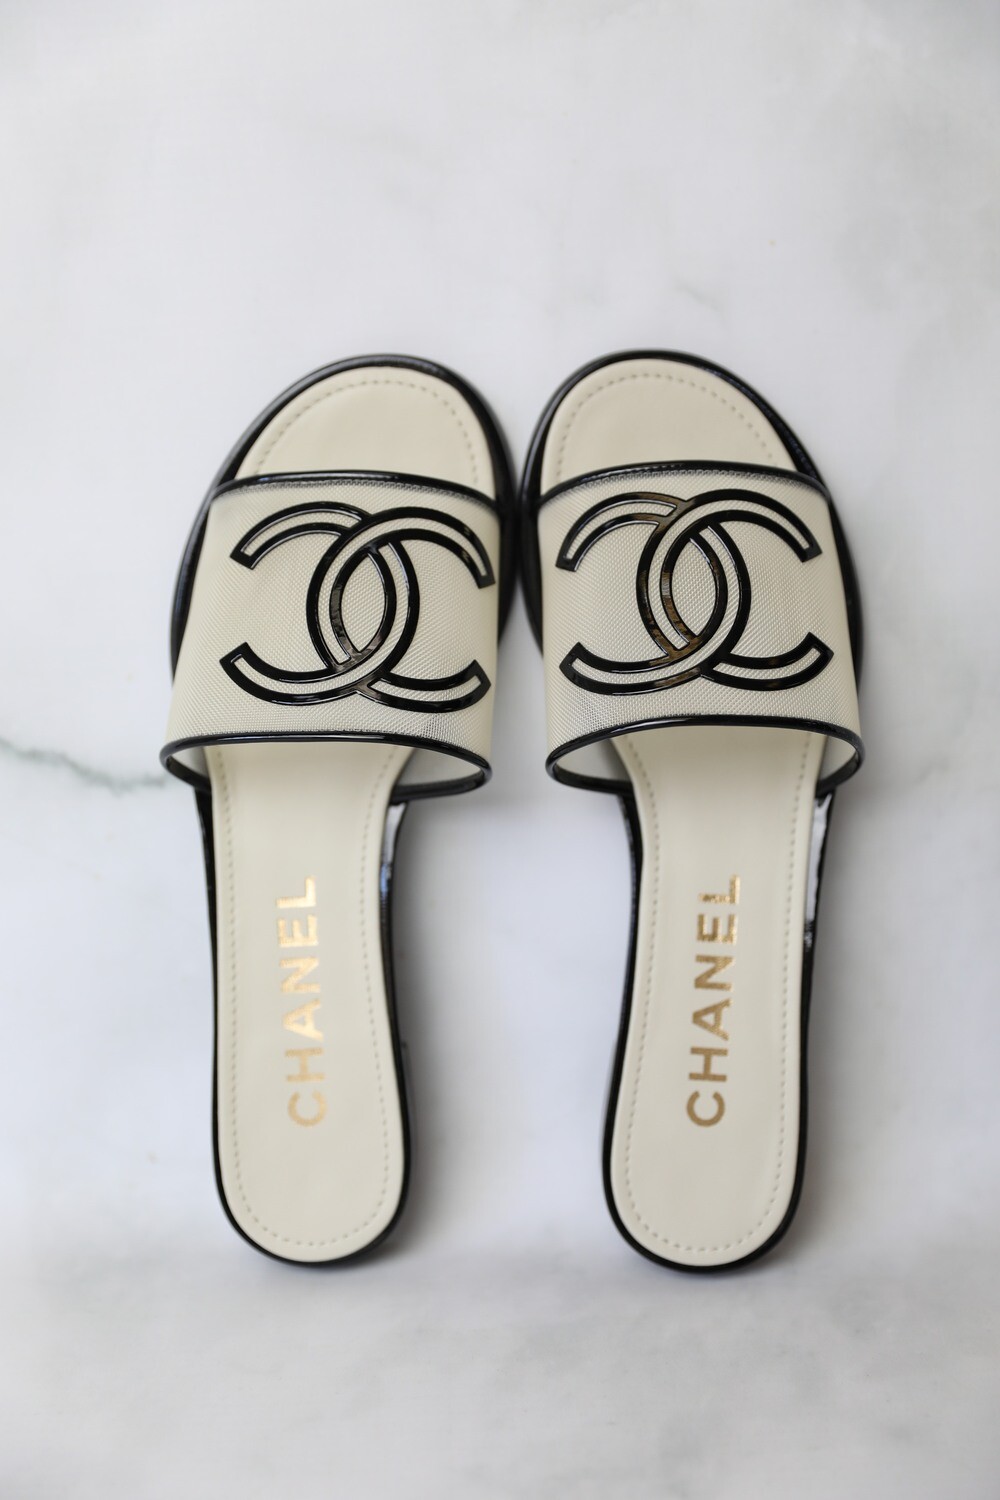 Chanel Slide Sandals, White Mesh, Size , New in Box WA001 - Julia Rose  Boston | Shop